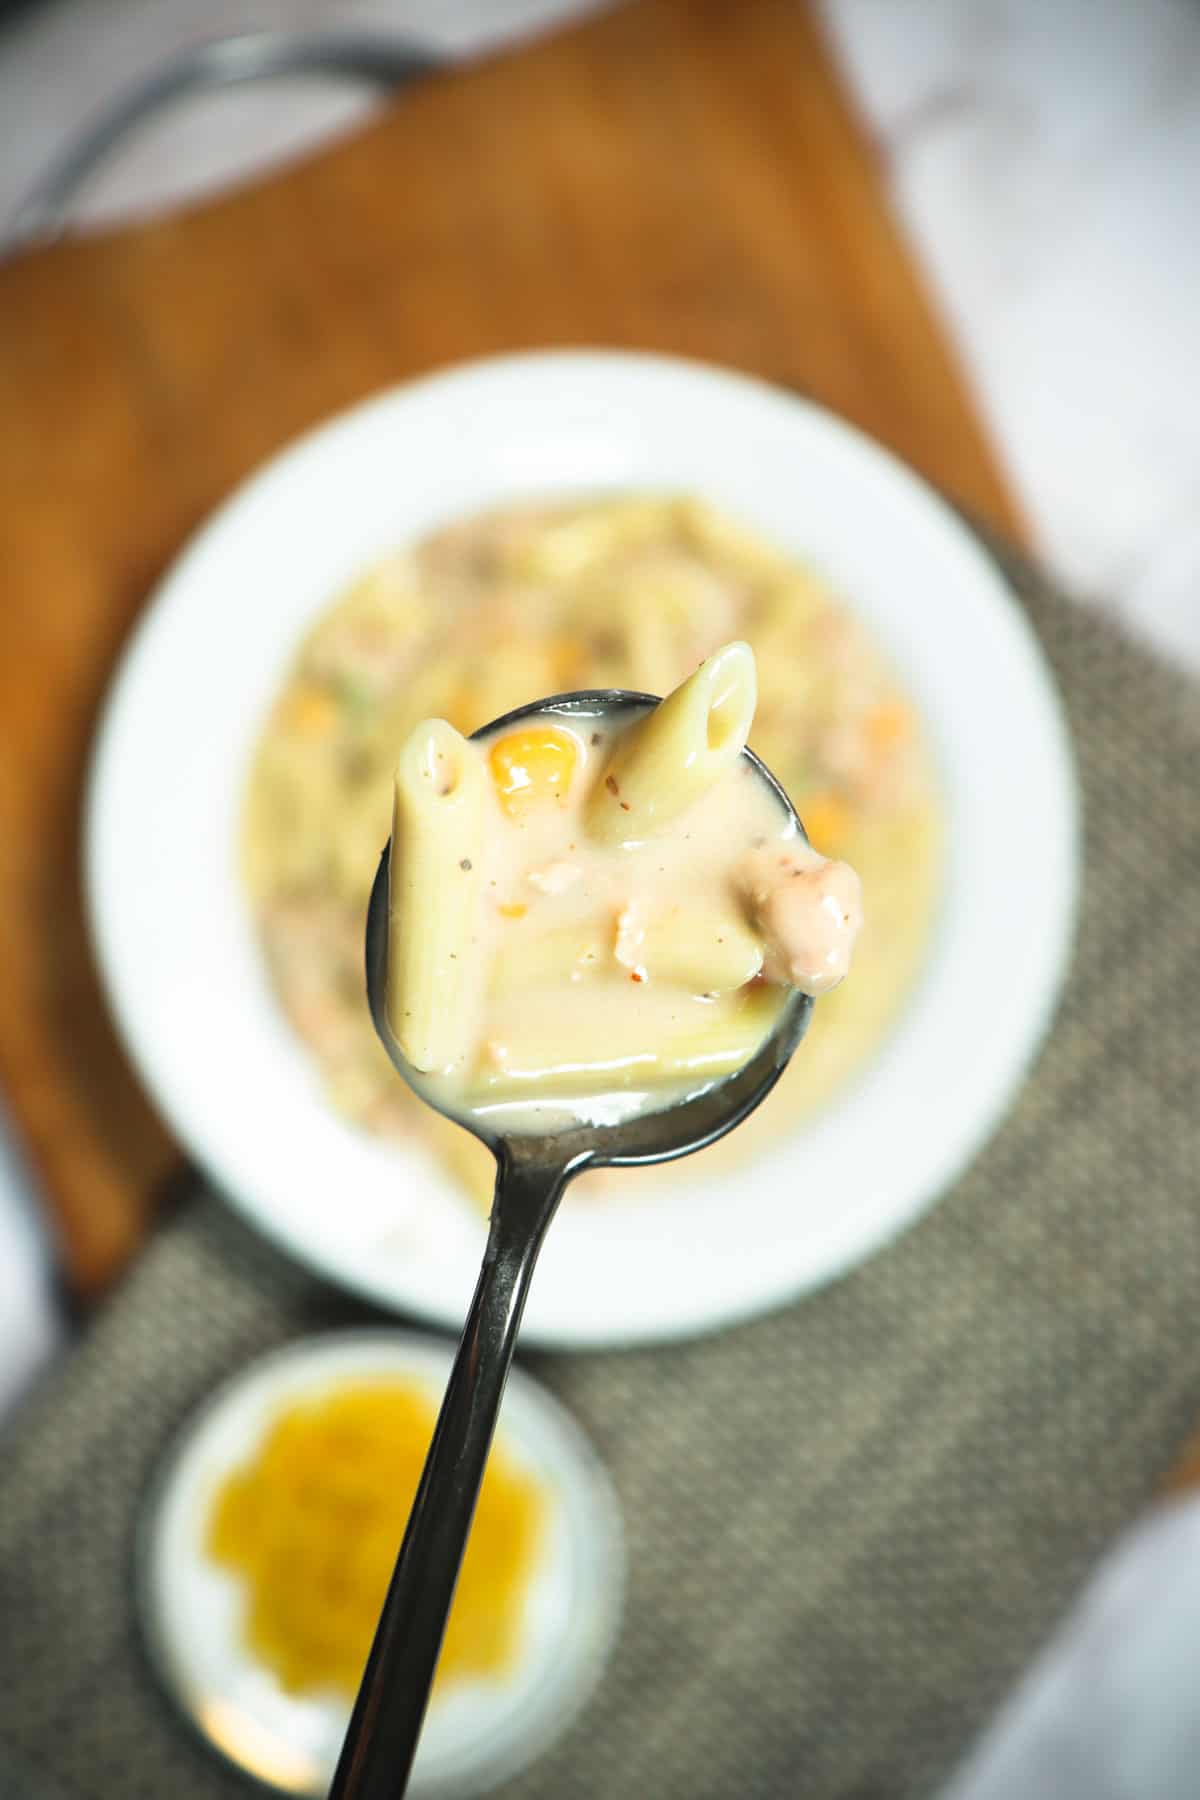 A close shot of pasta in a spoon.